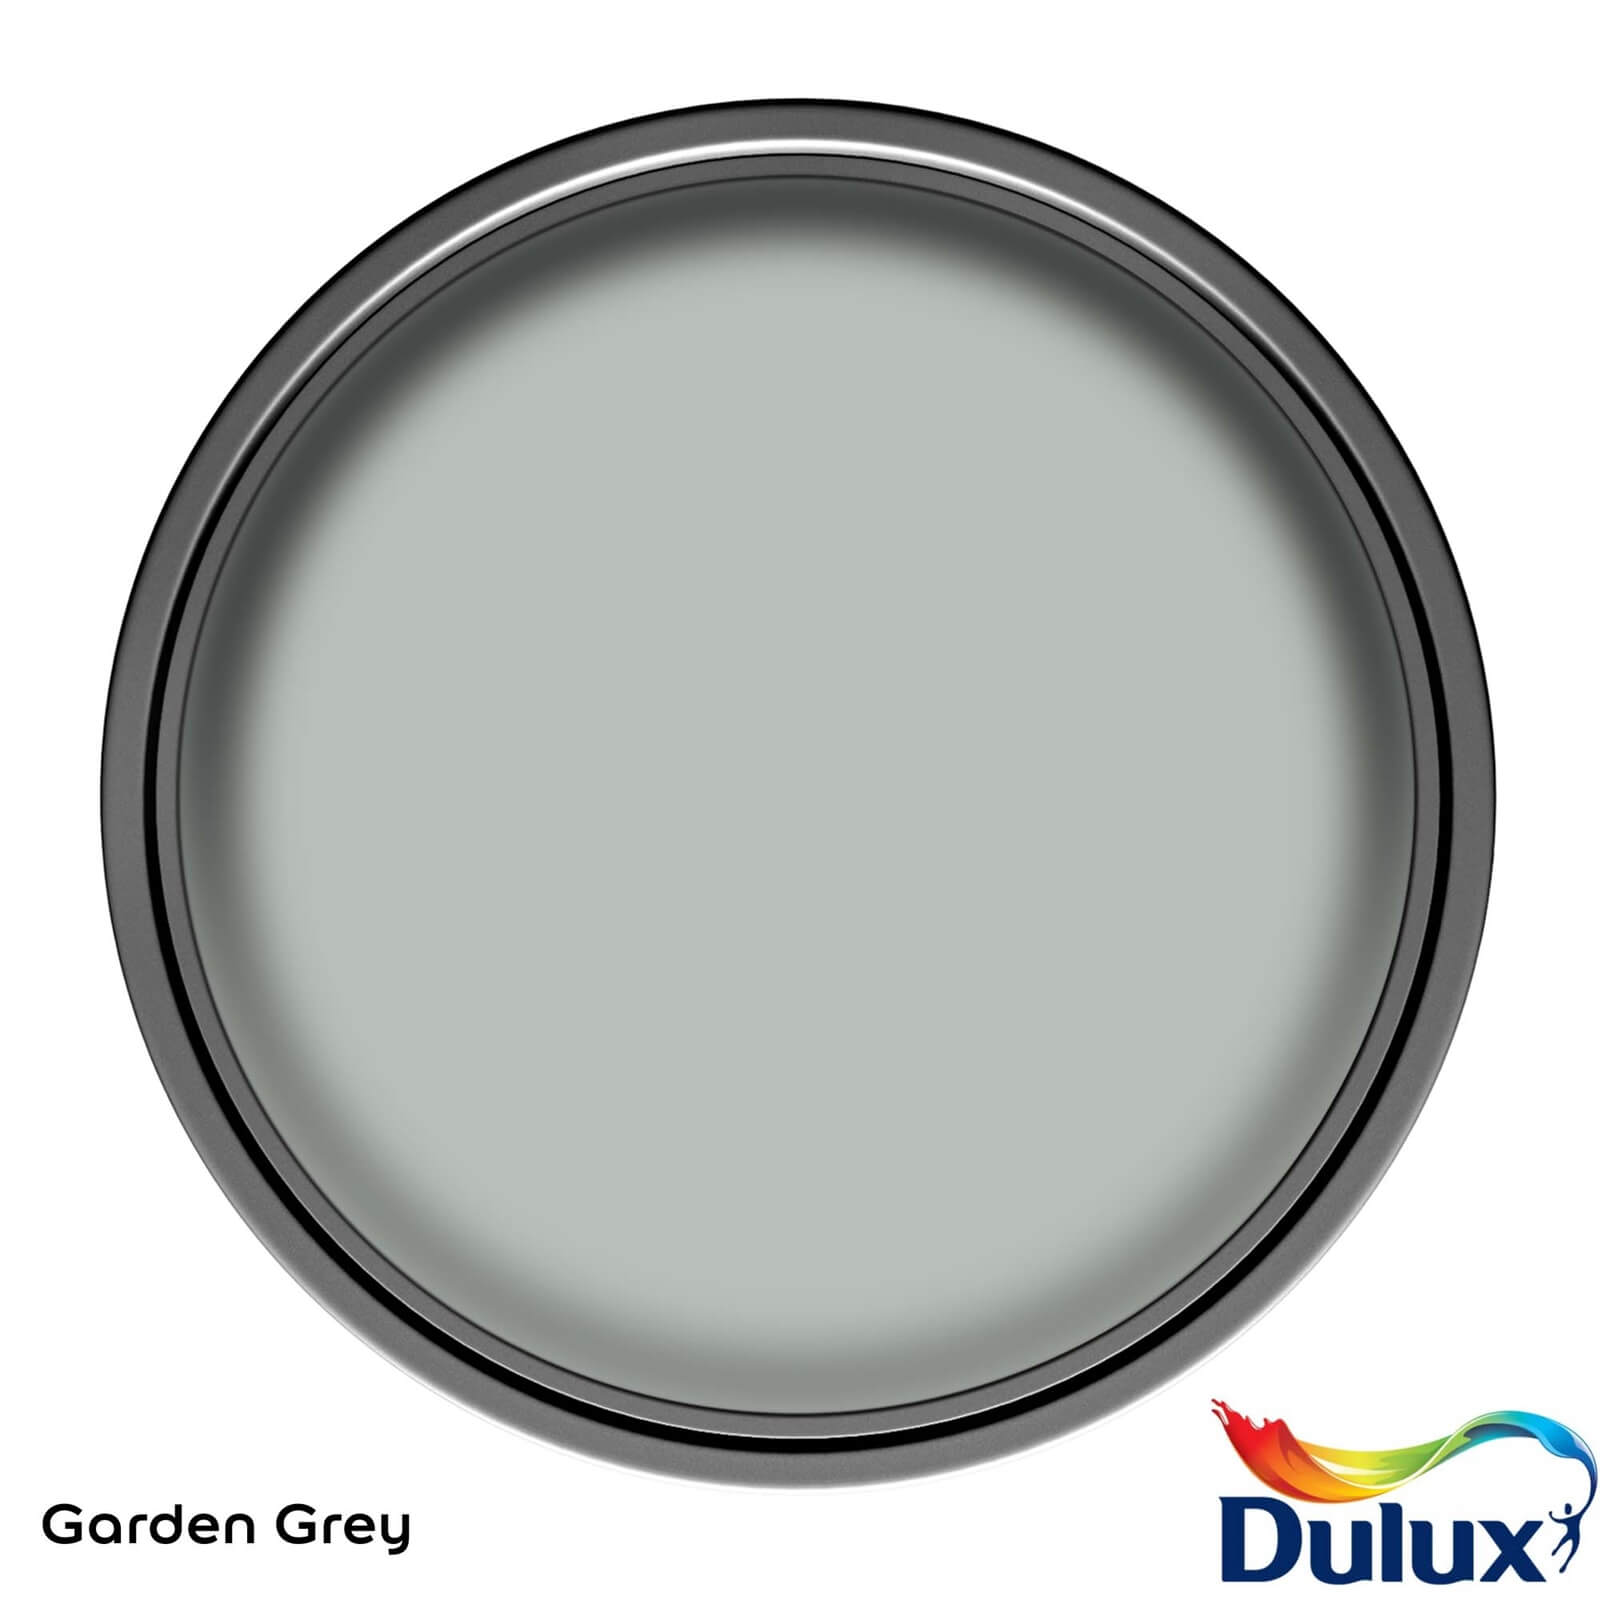 Dulux Weathershield Quick Dry Satin Paint Garden Grey - 750ml